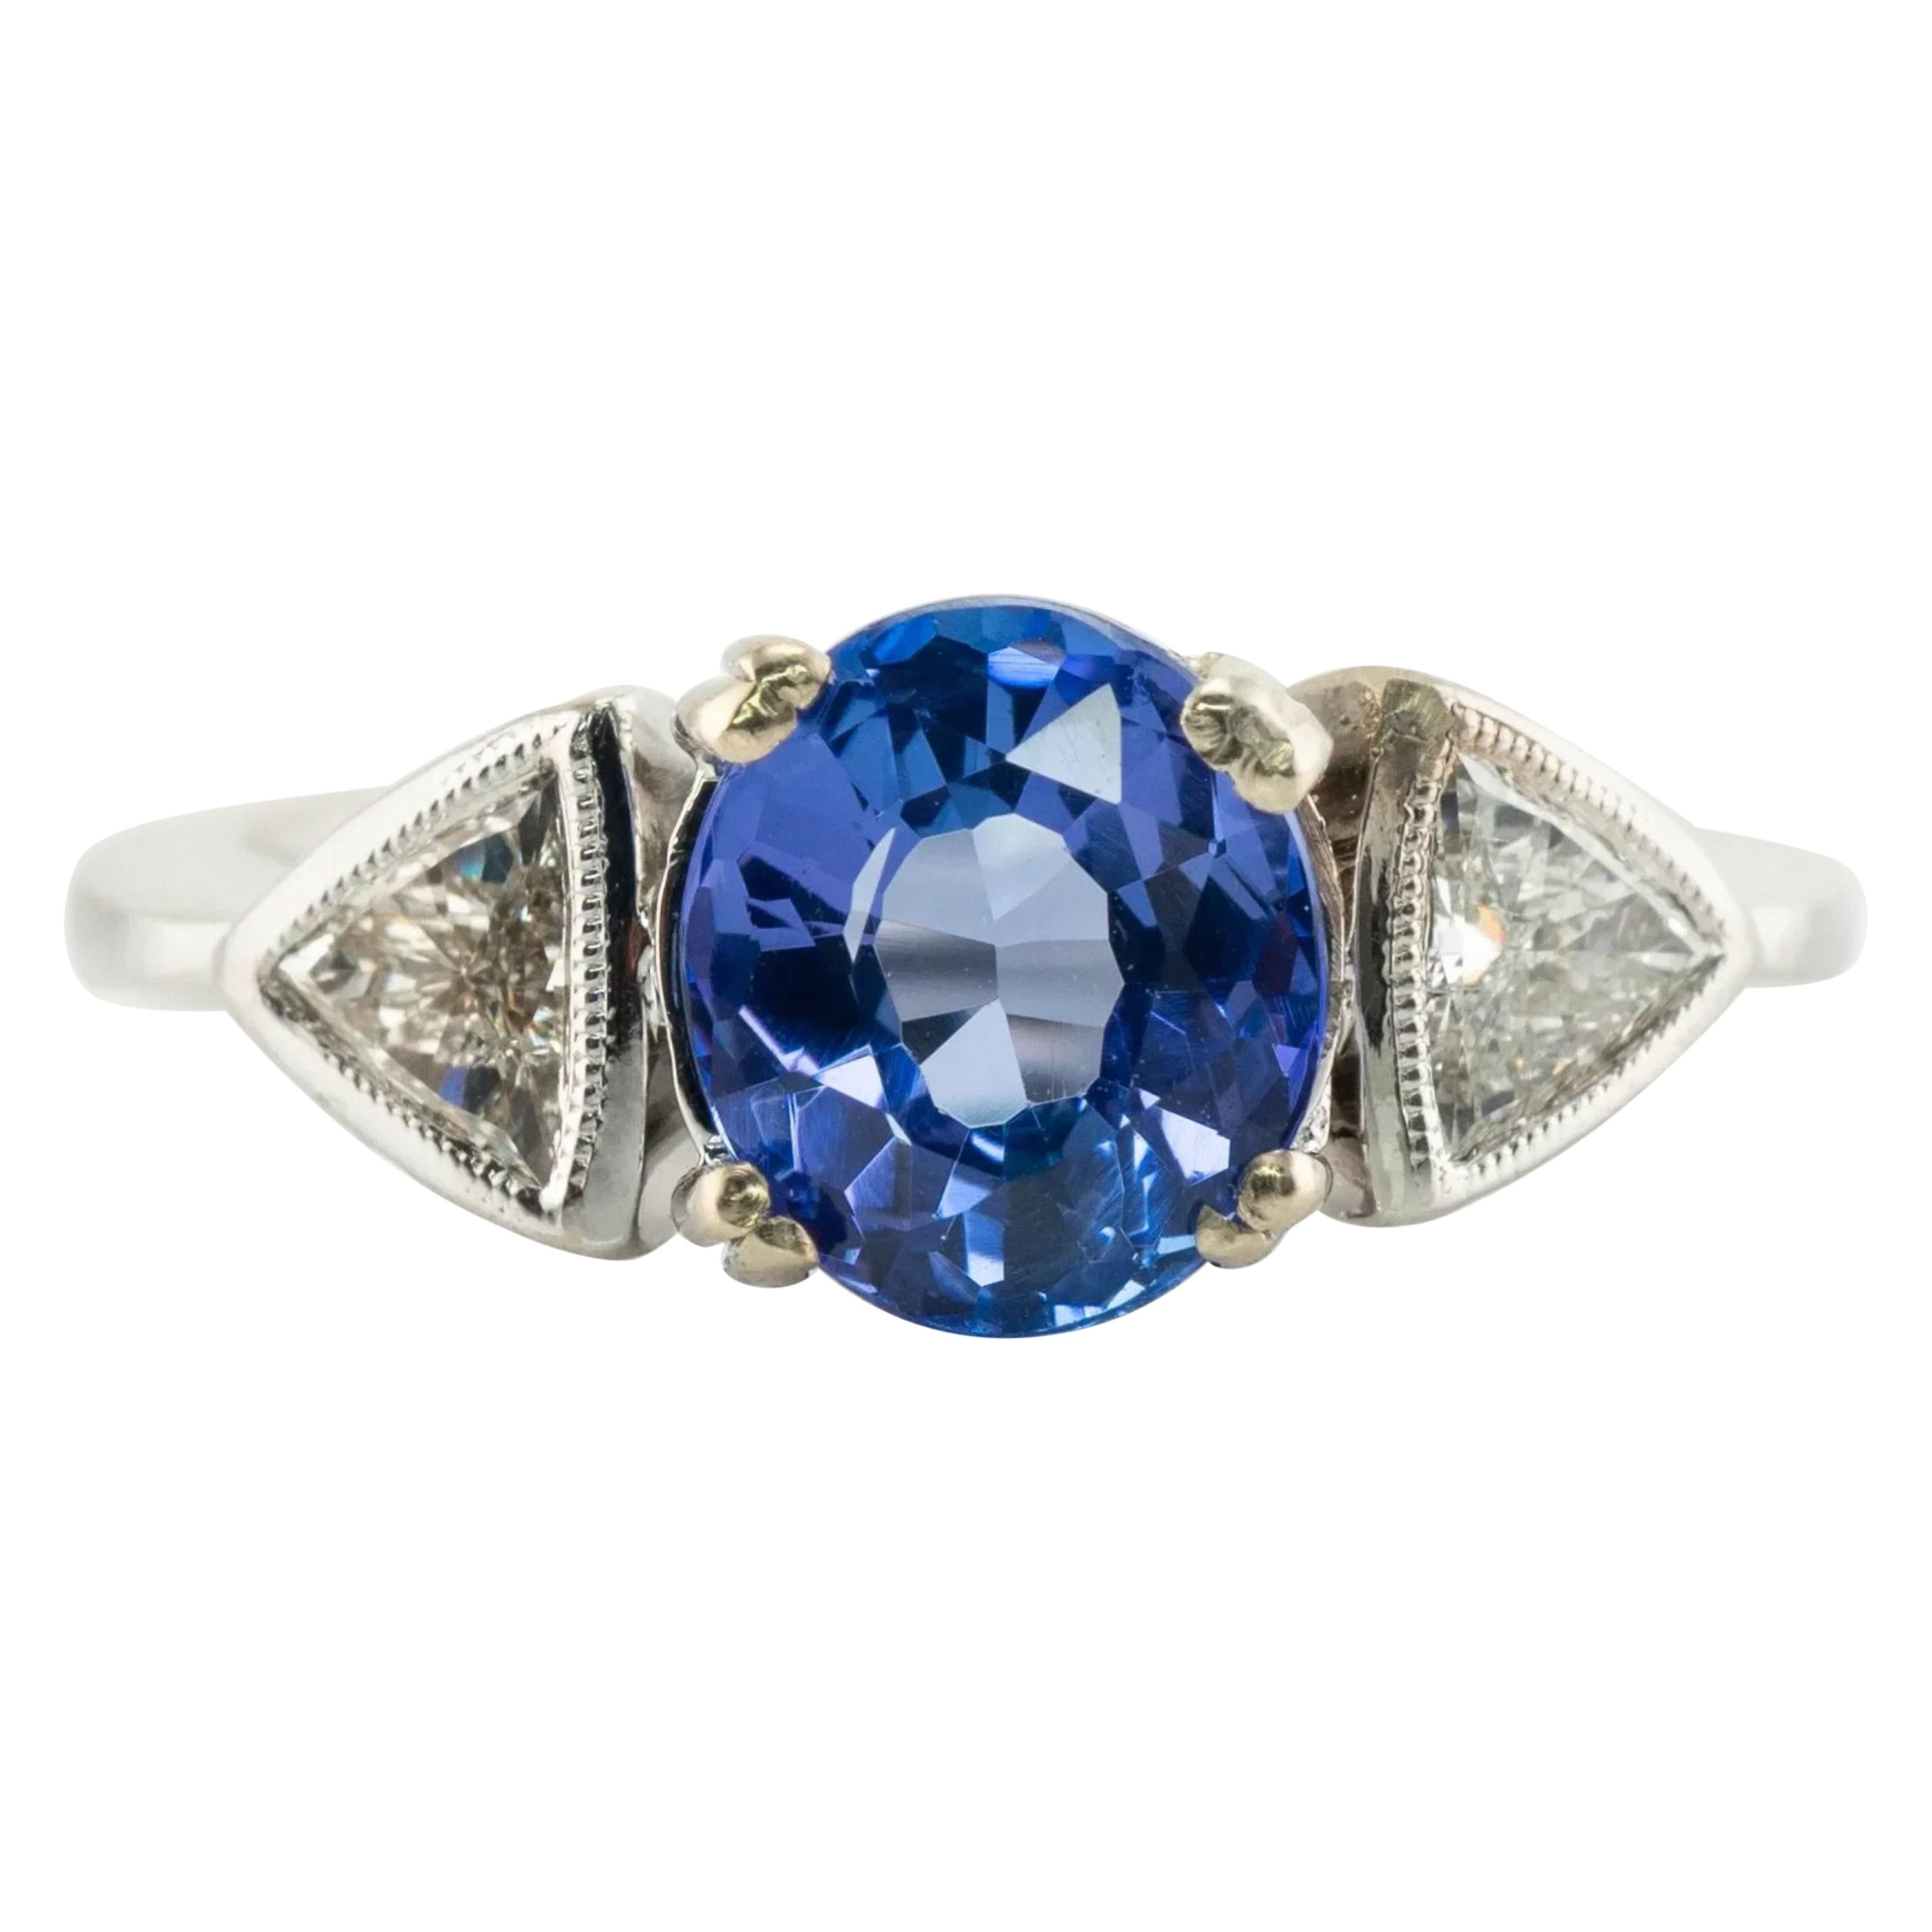 1.5 Carat Round Brilliant Cut Blue Sapphire Diamond Engagement Ring 3 Stone Ring